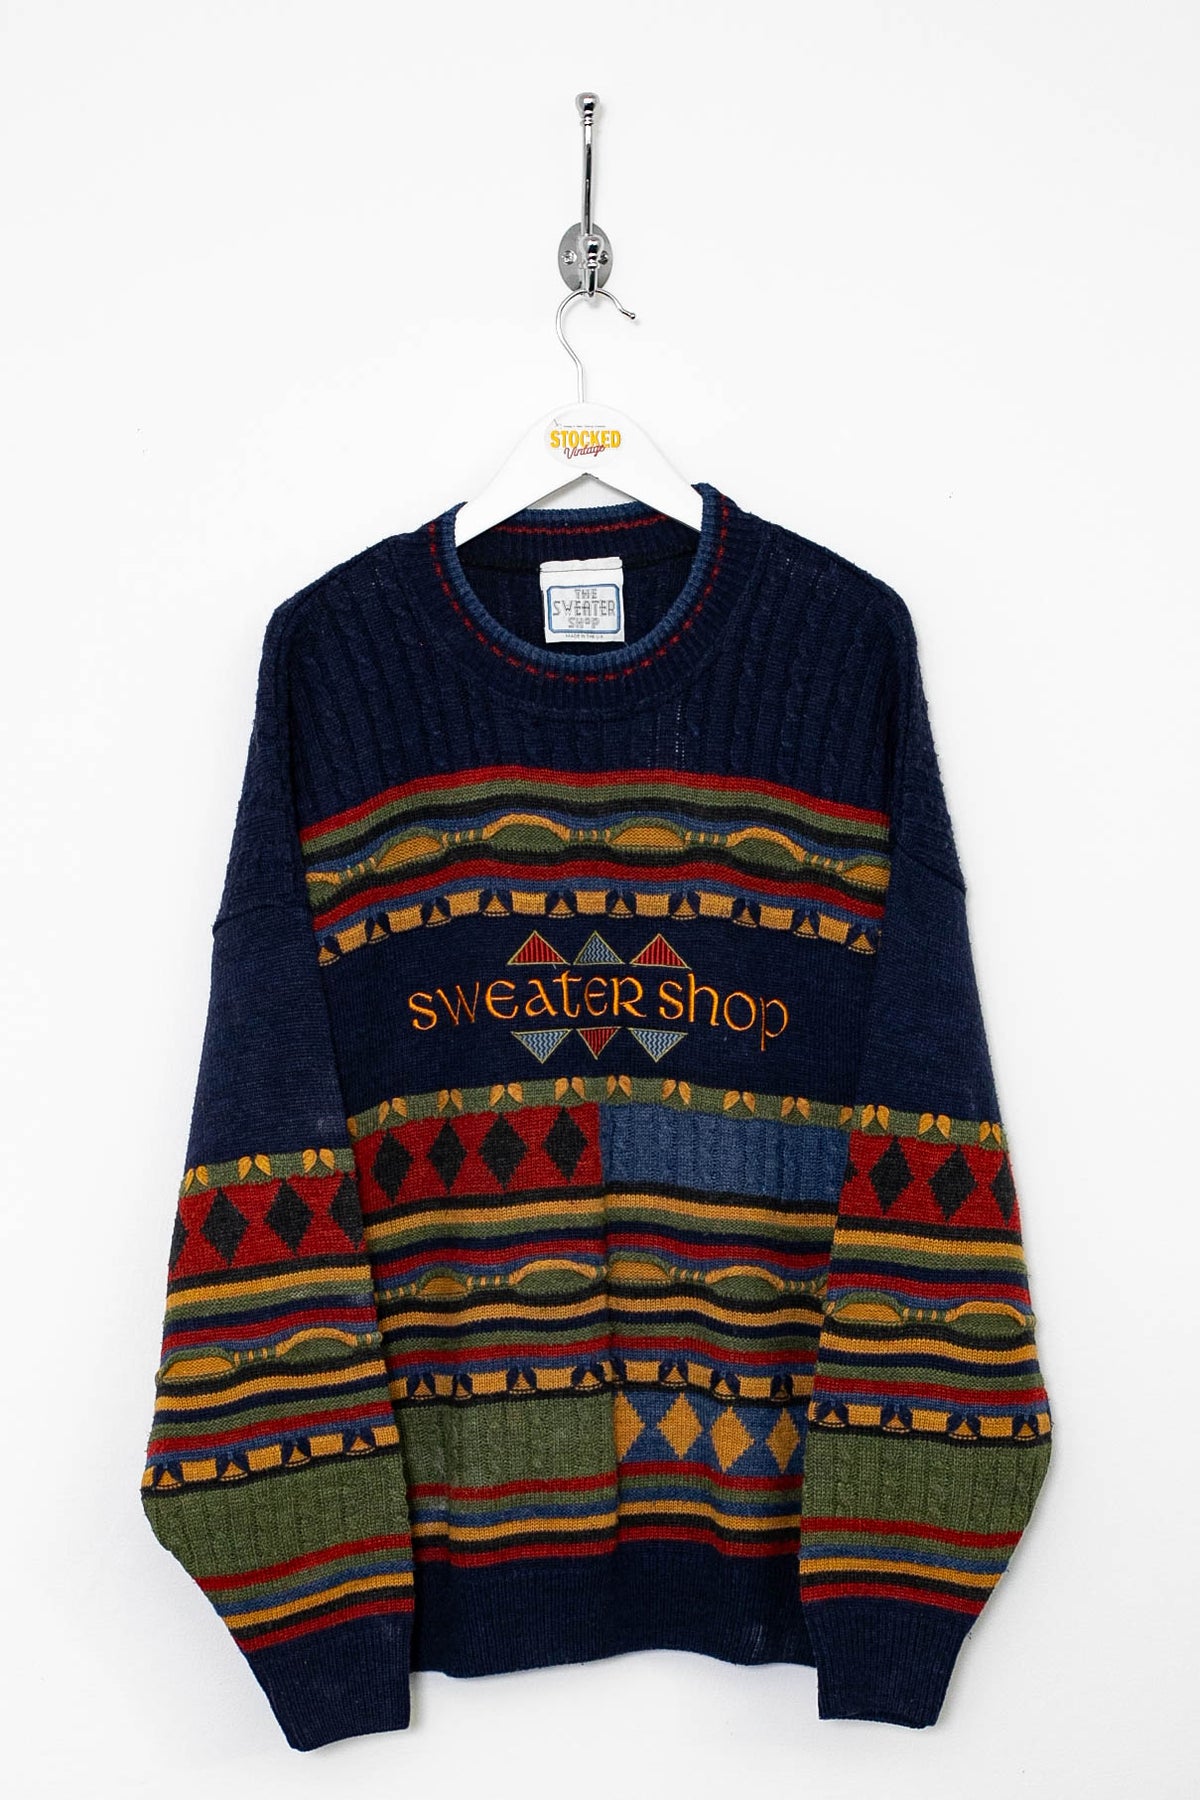 90s Sweater Shop Knit Jumper (M)